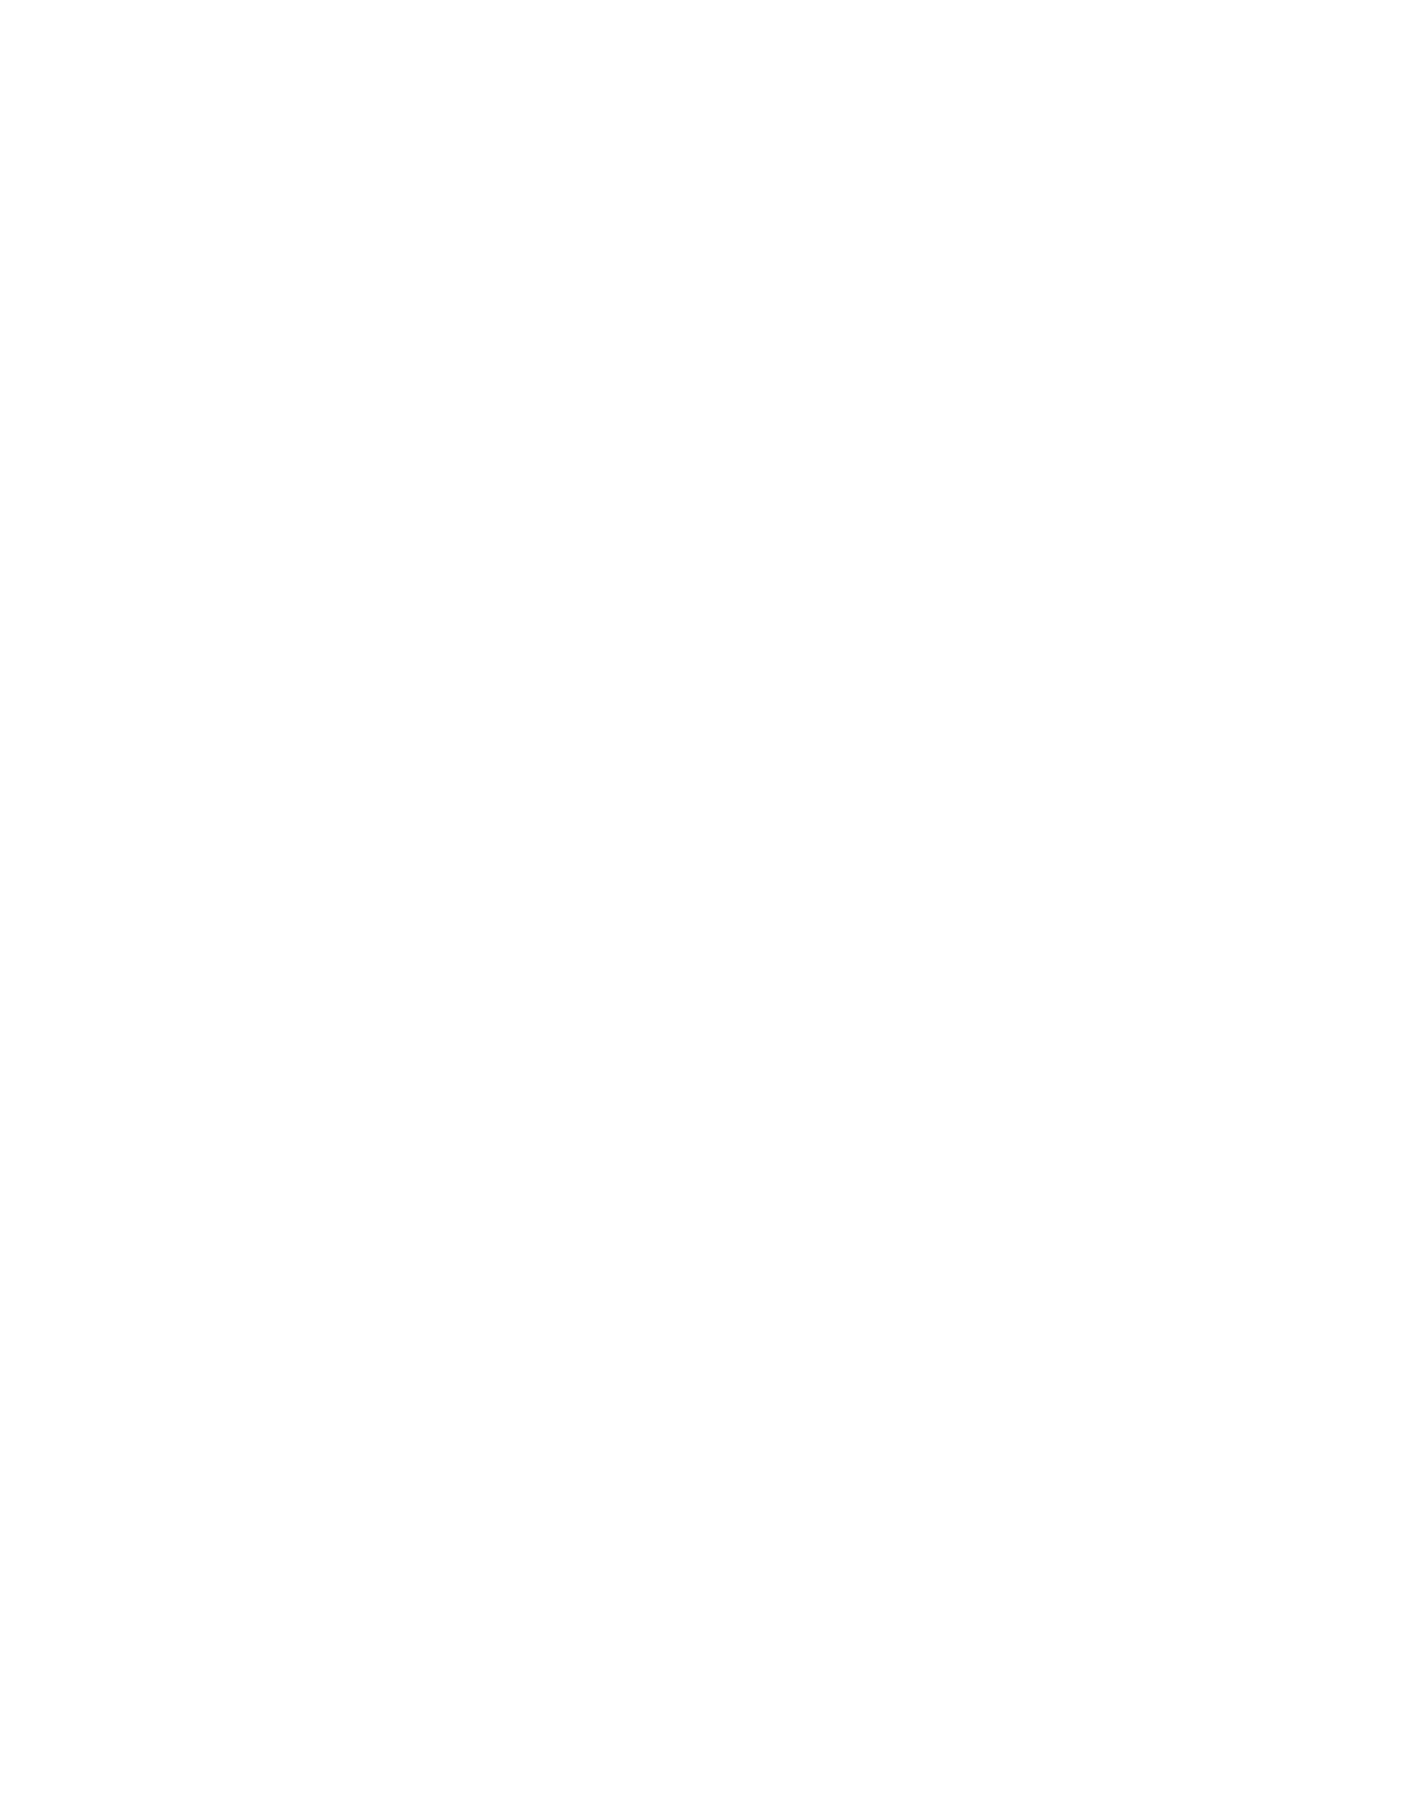 Glenfiddich Whisky stag logo